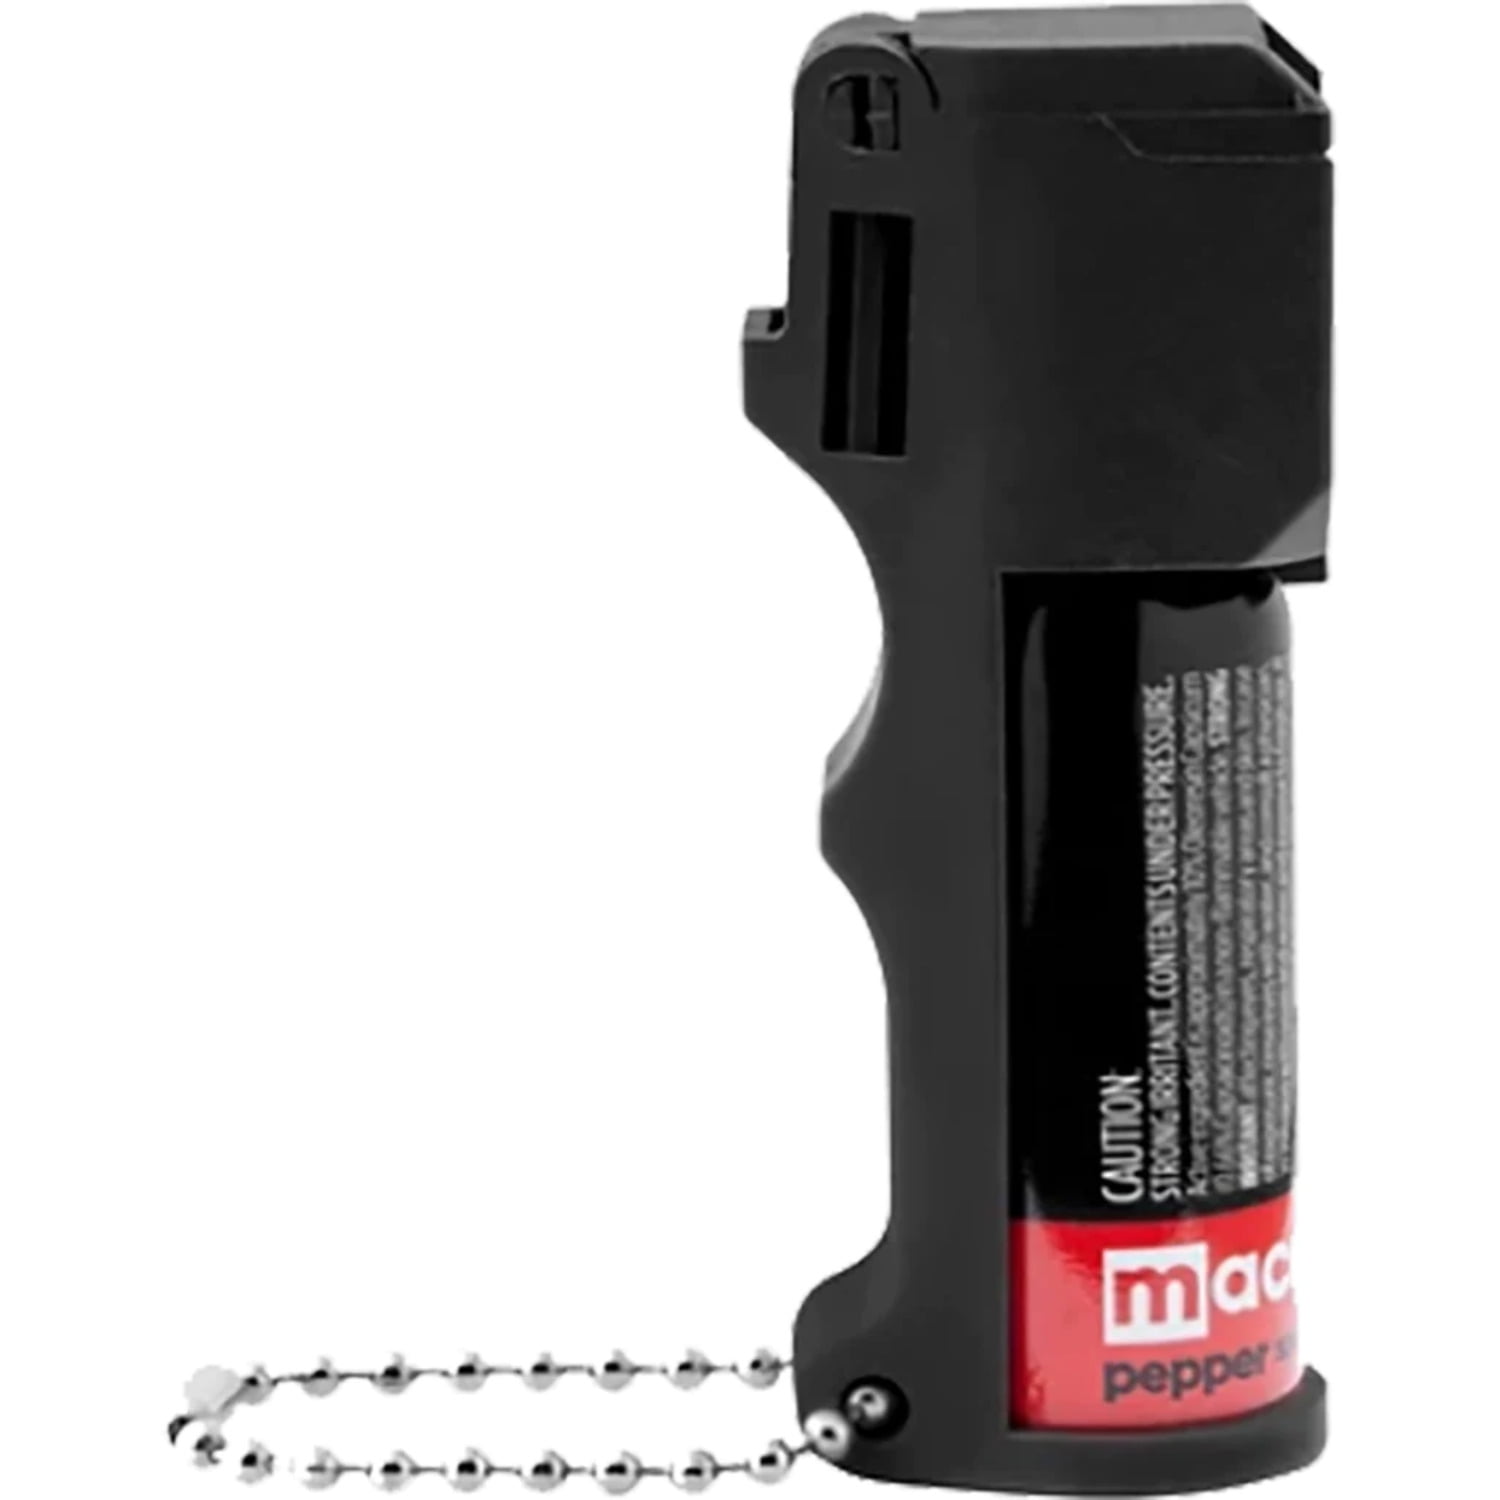 Marking - Pepper with Mace Black Model Max Strength Dye Spray UV Pocket Brand